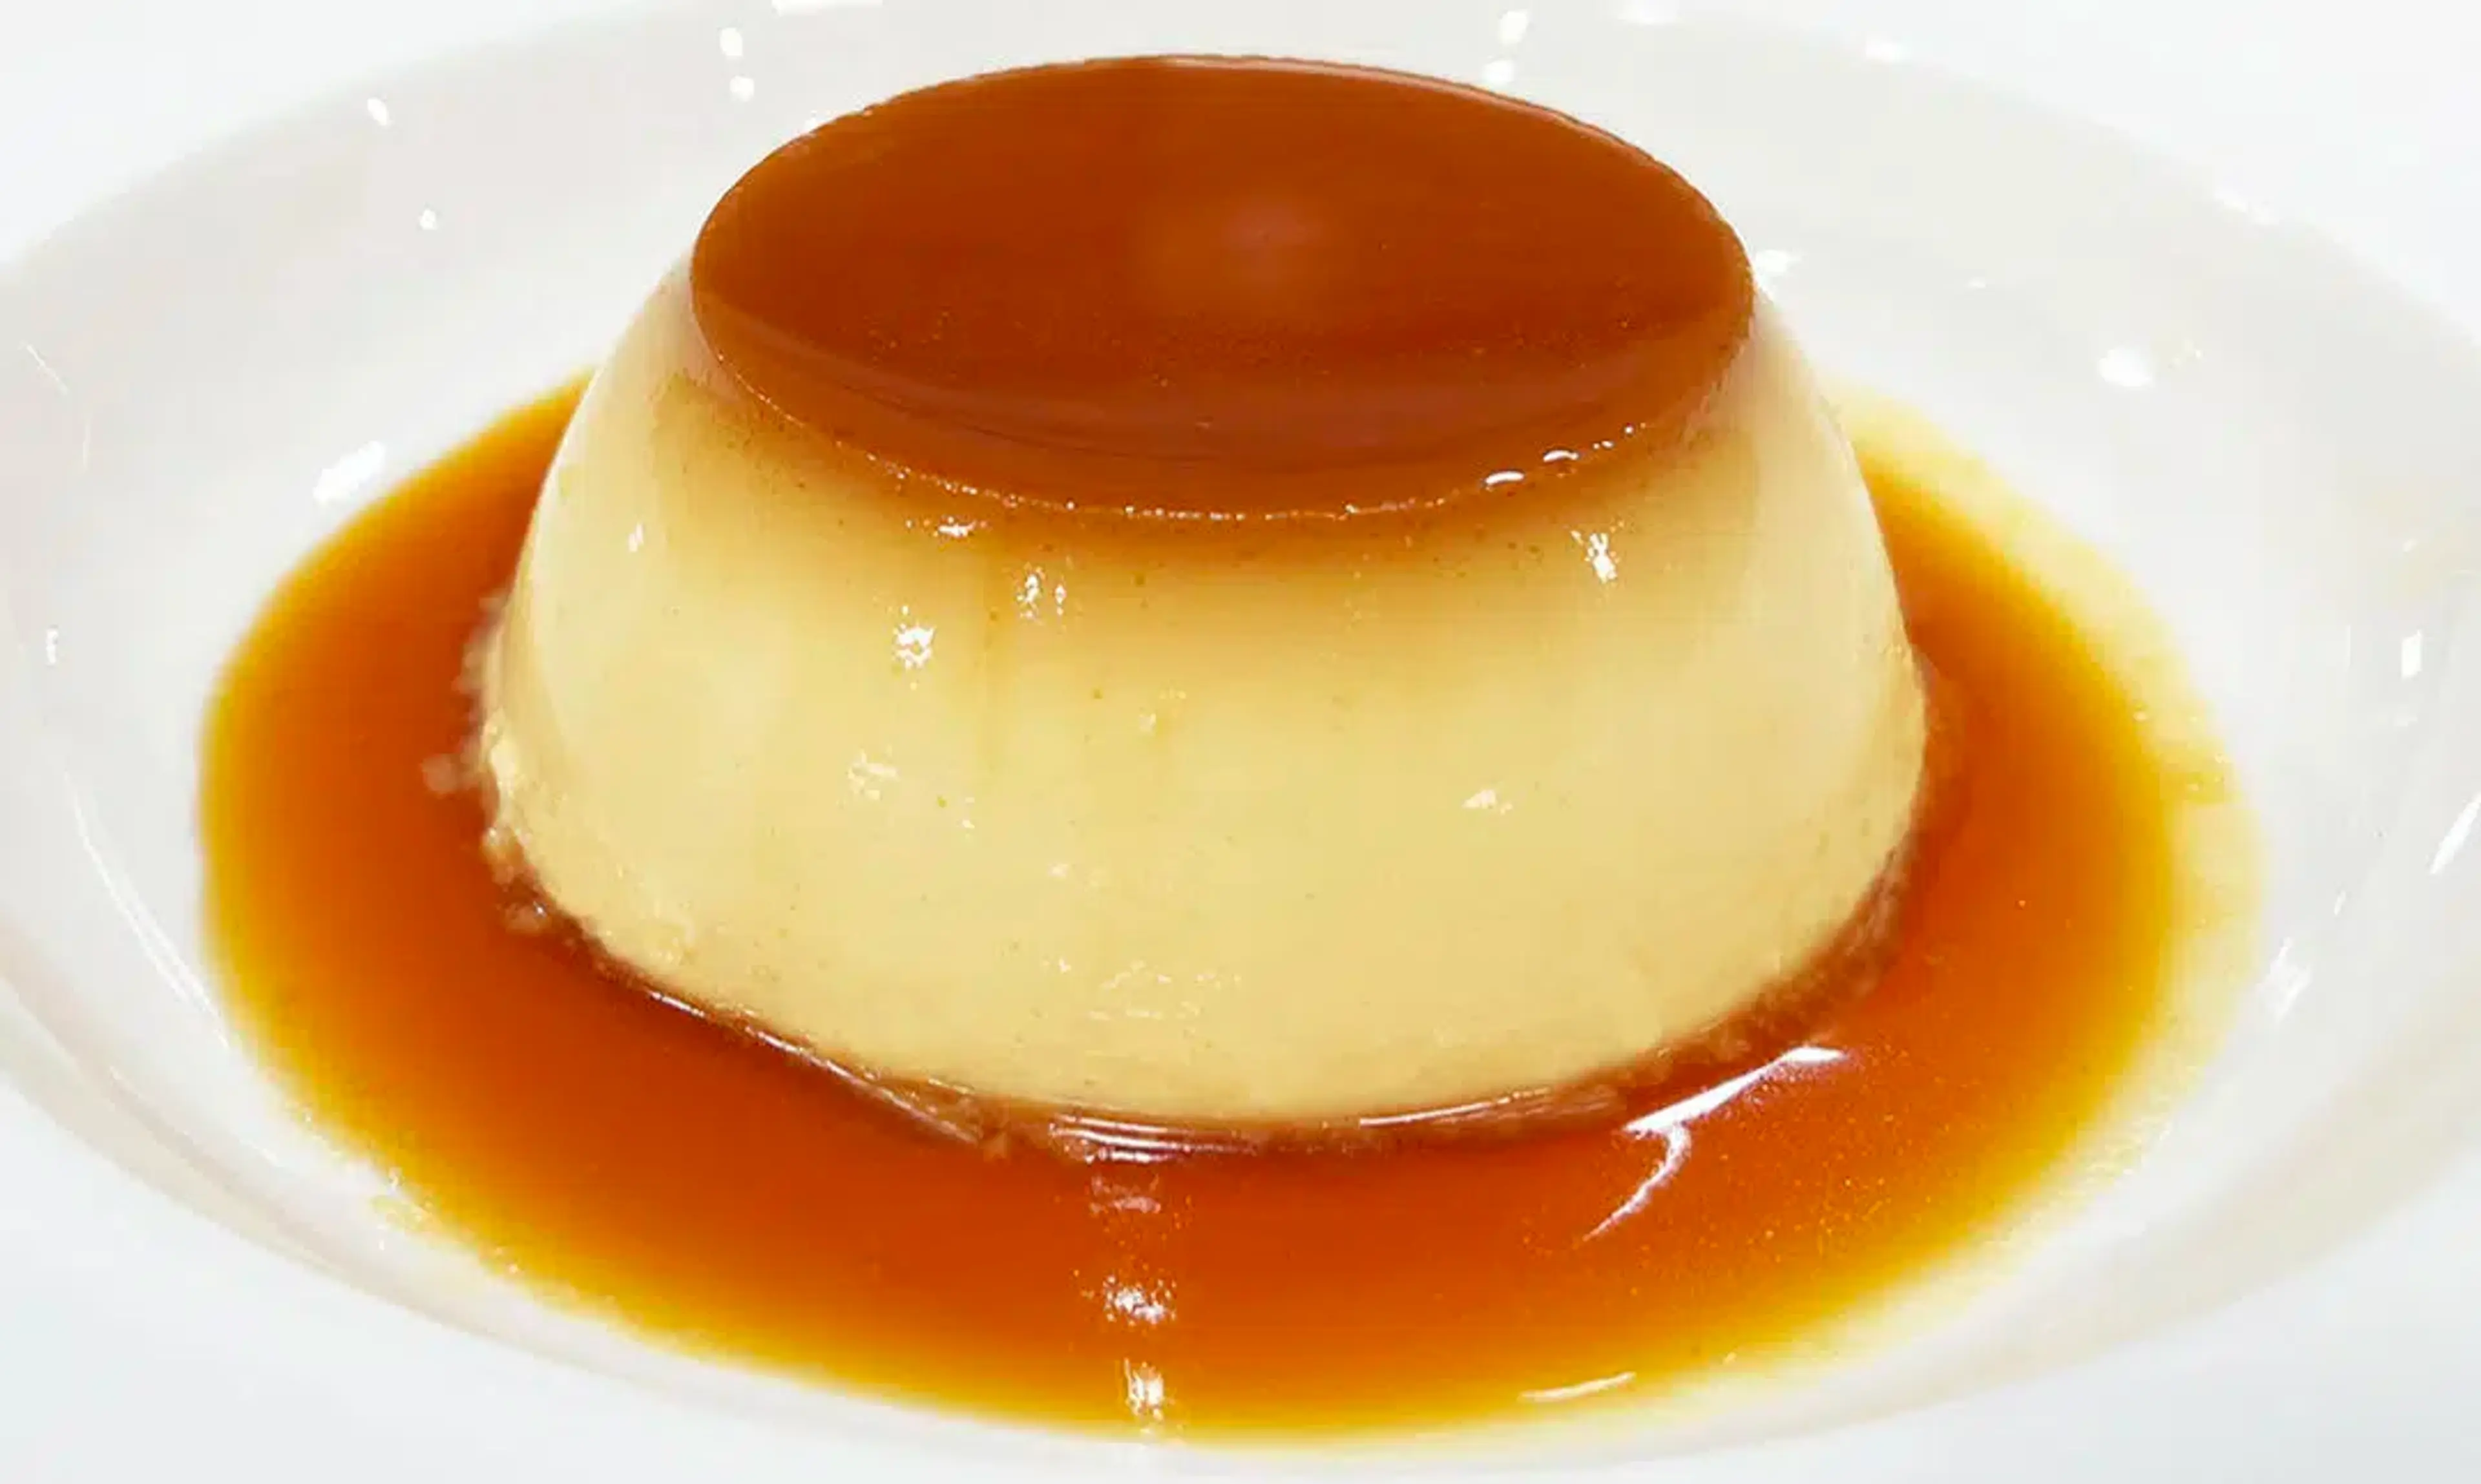 Crème Caramel - My Favorite Dessert!